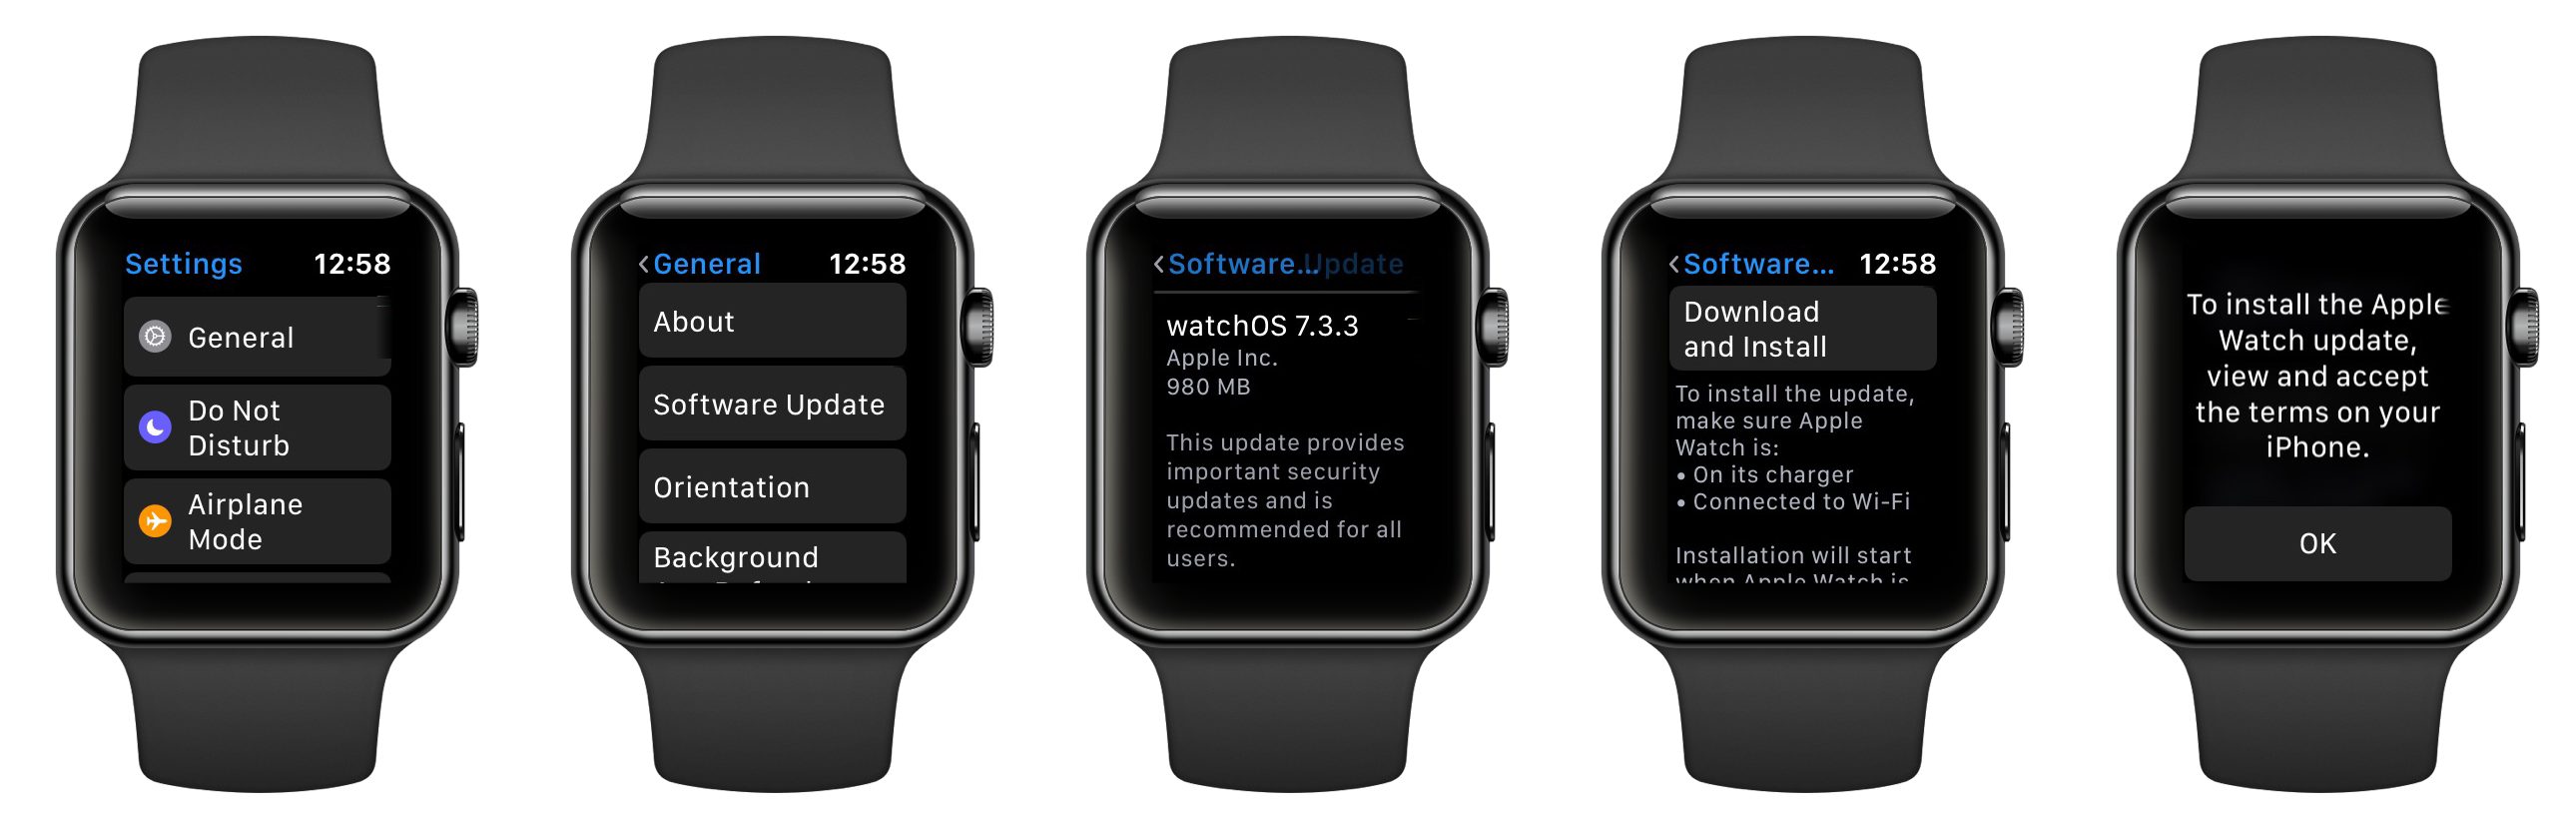 Apple Watch Series 3 Update Workarounds